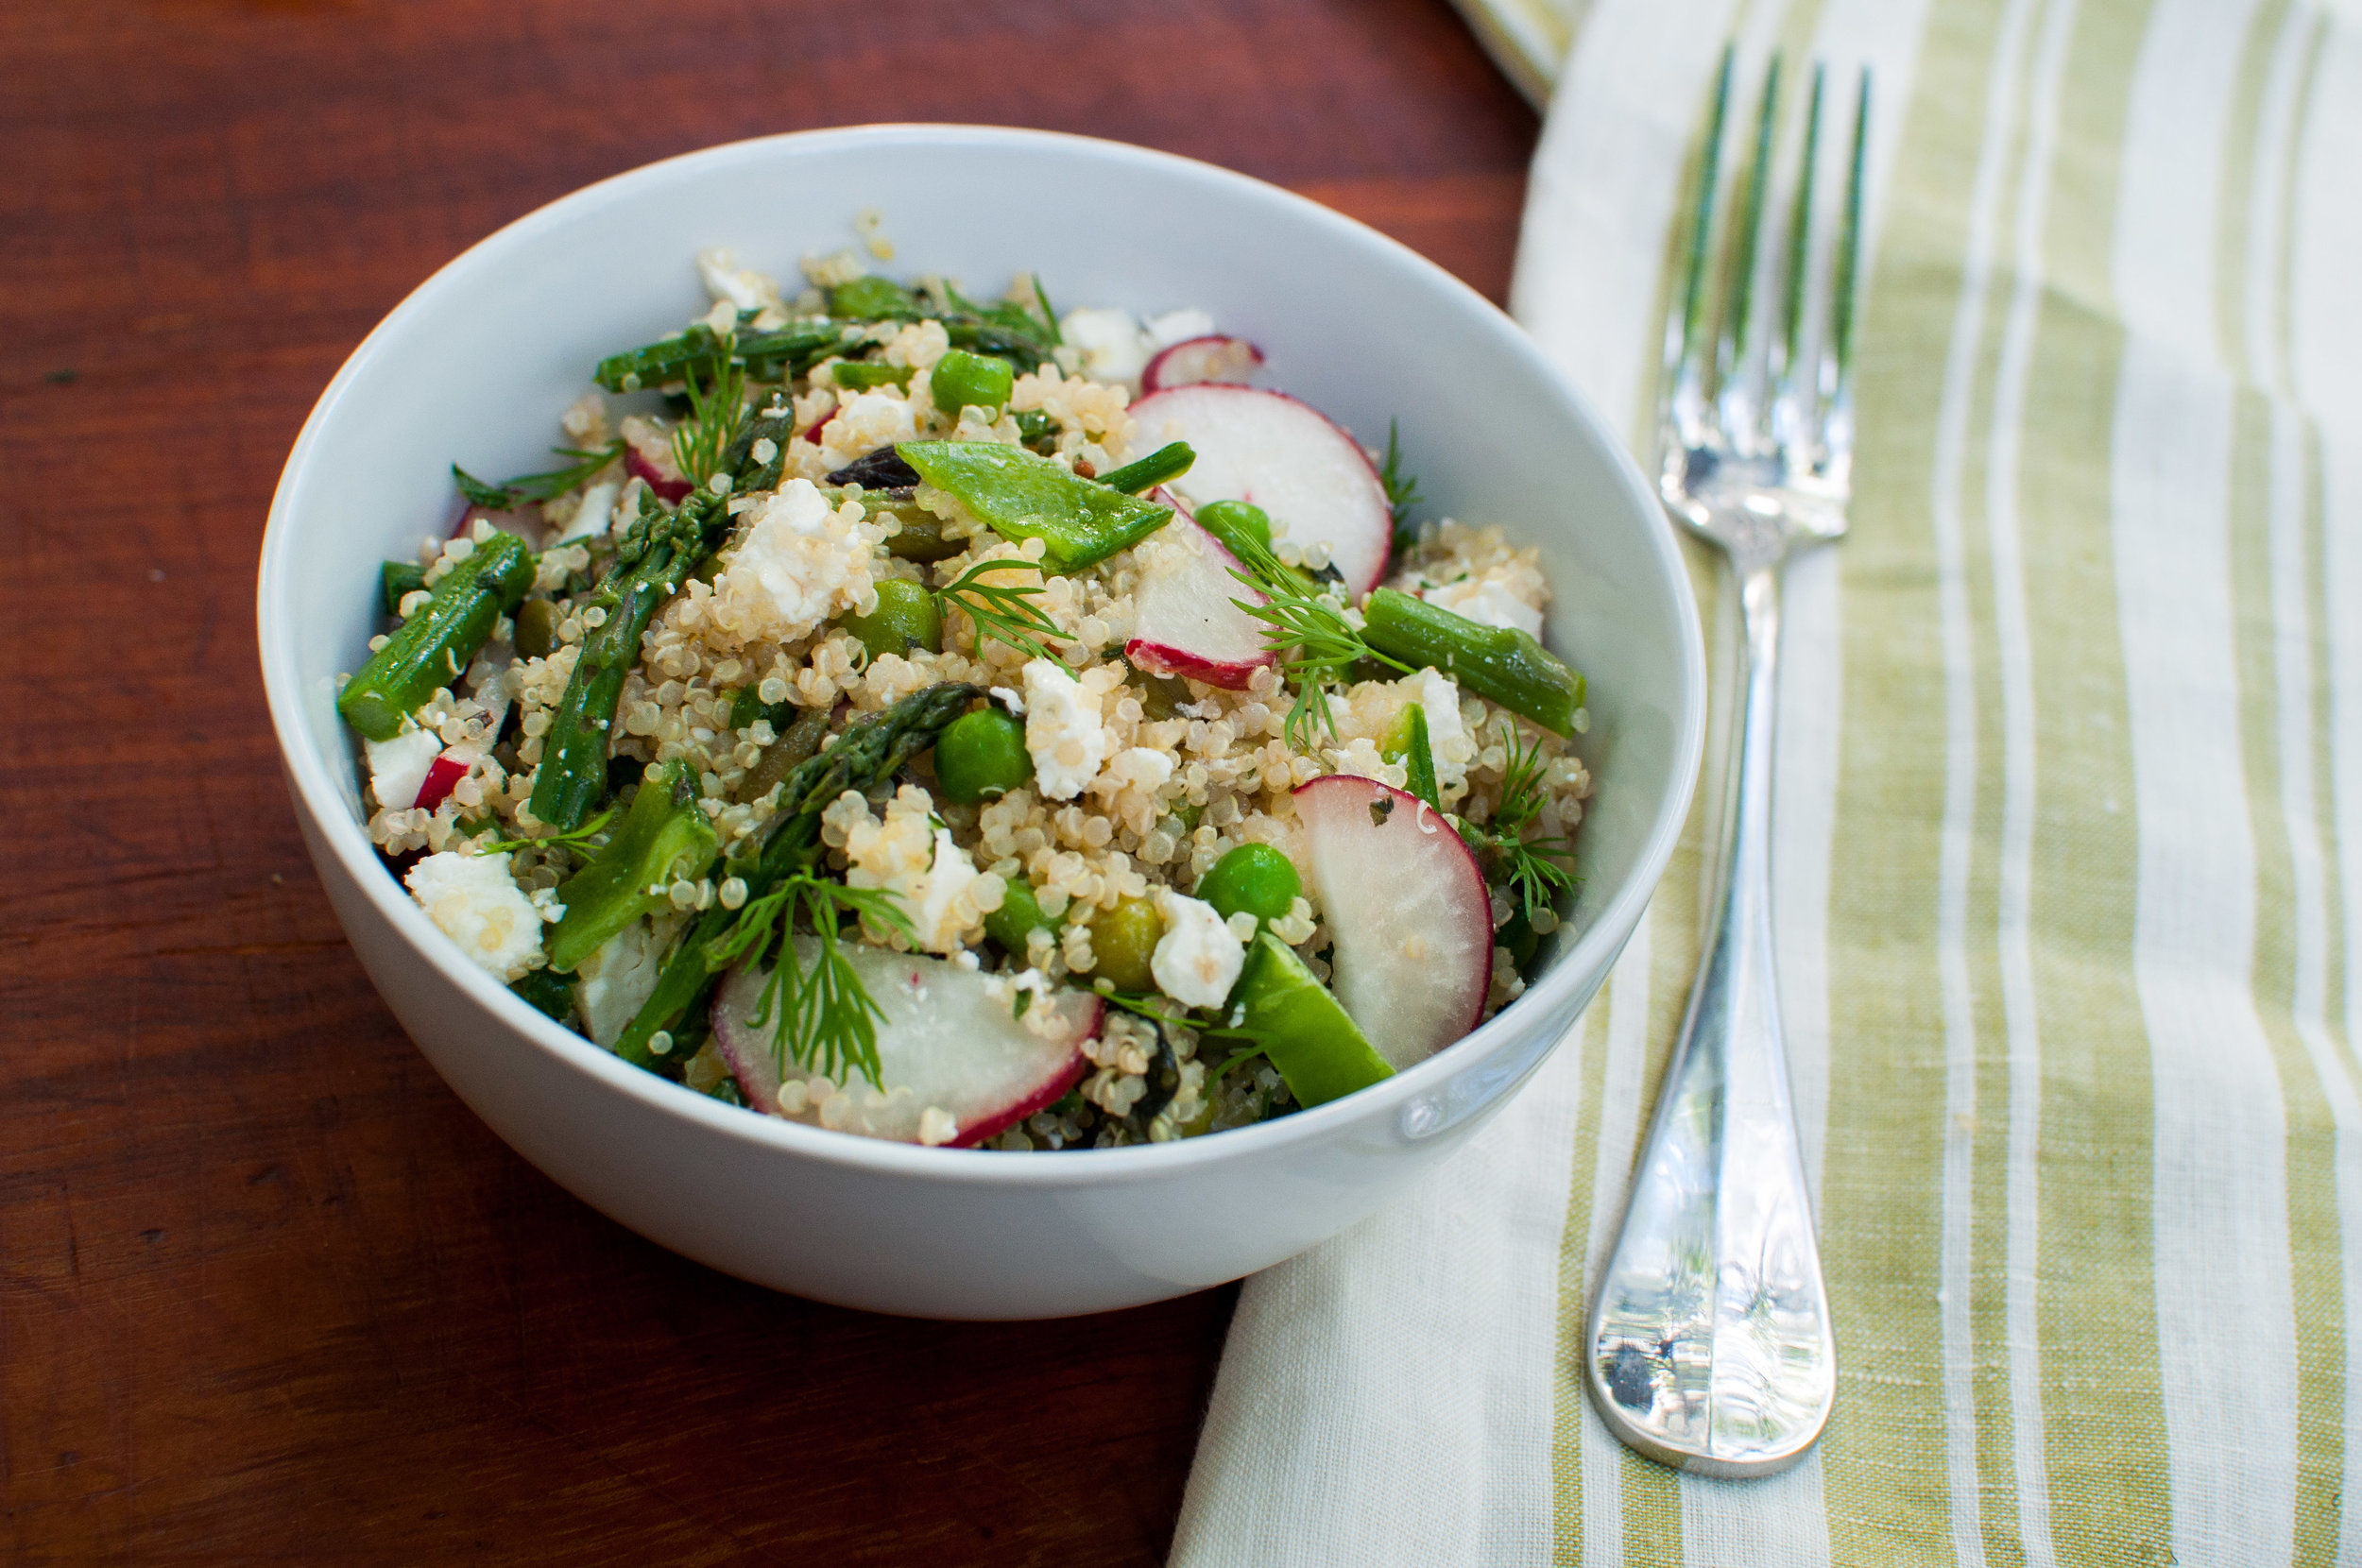 Greek Kale and Quinoa Salad Meal Prep Bowls - Abra's Kitchen